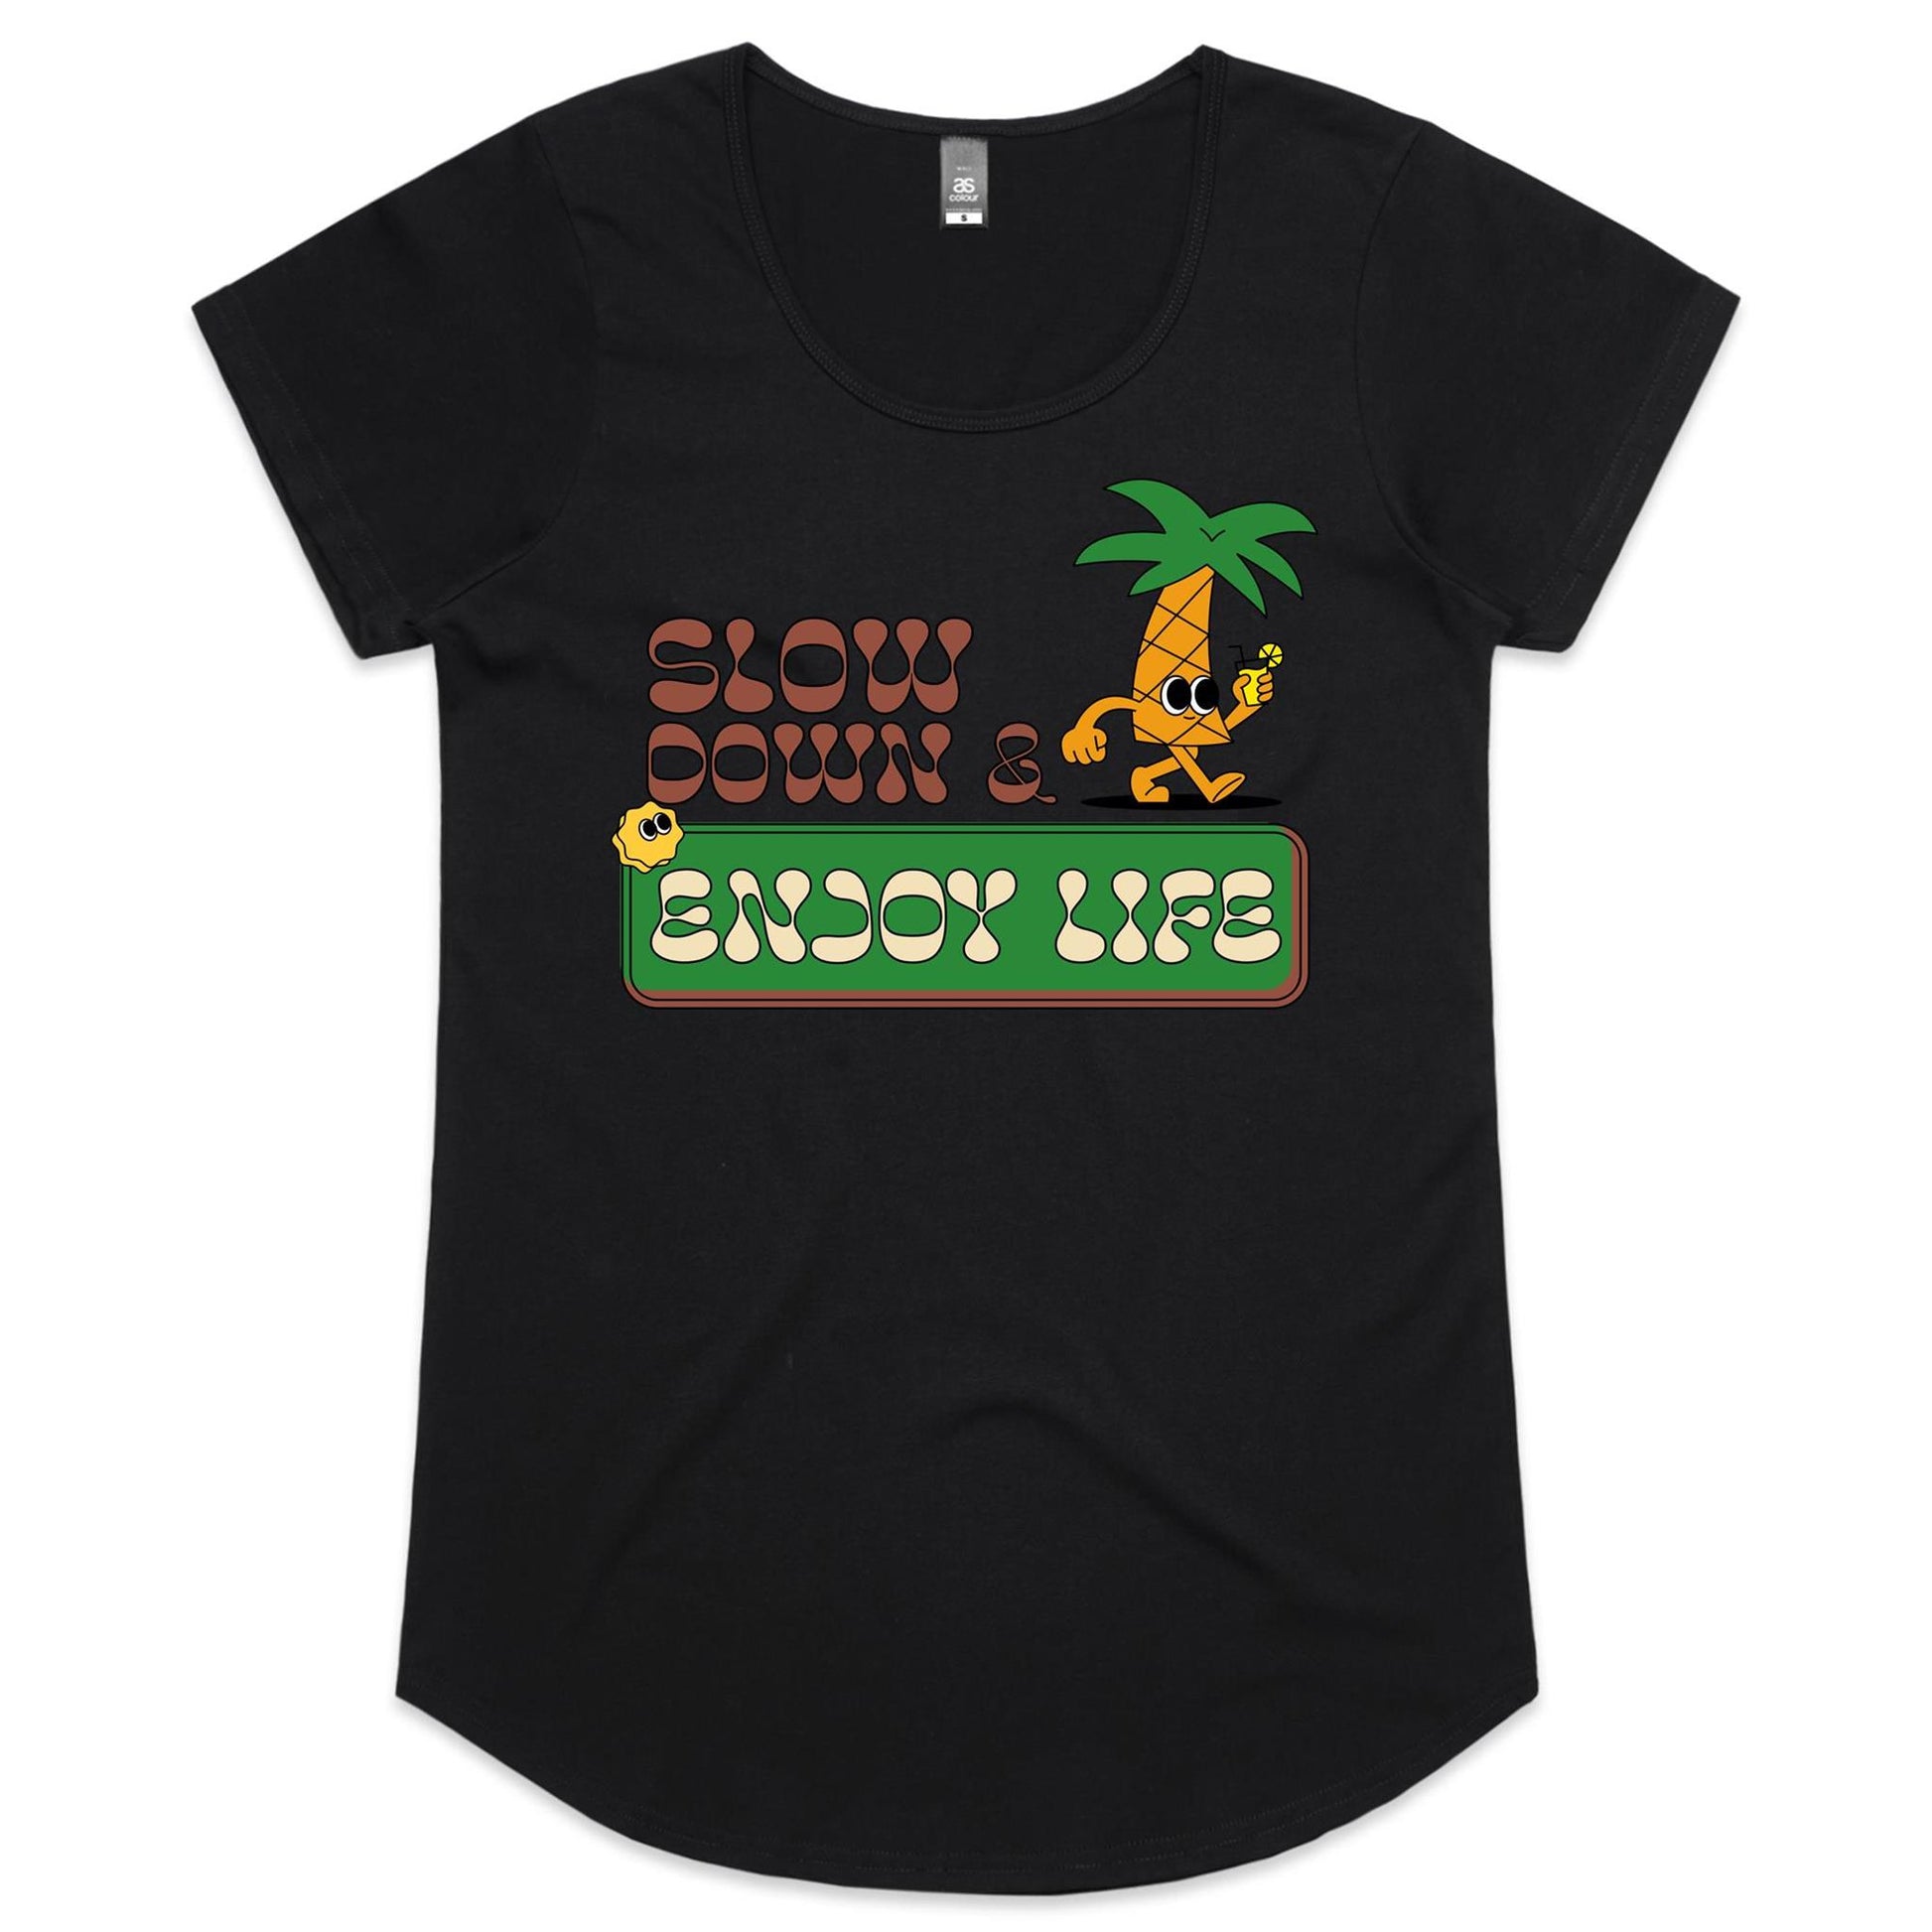 Slow Down & Enjoy Life - Womens Scoop Neck T-Shirt Black Womens Scoop Neck T-shirt Motivation Summer